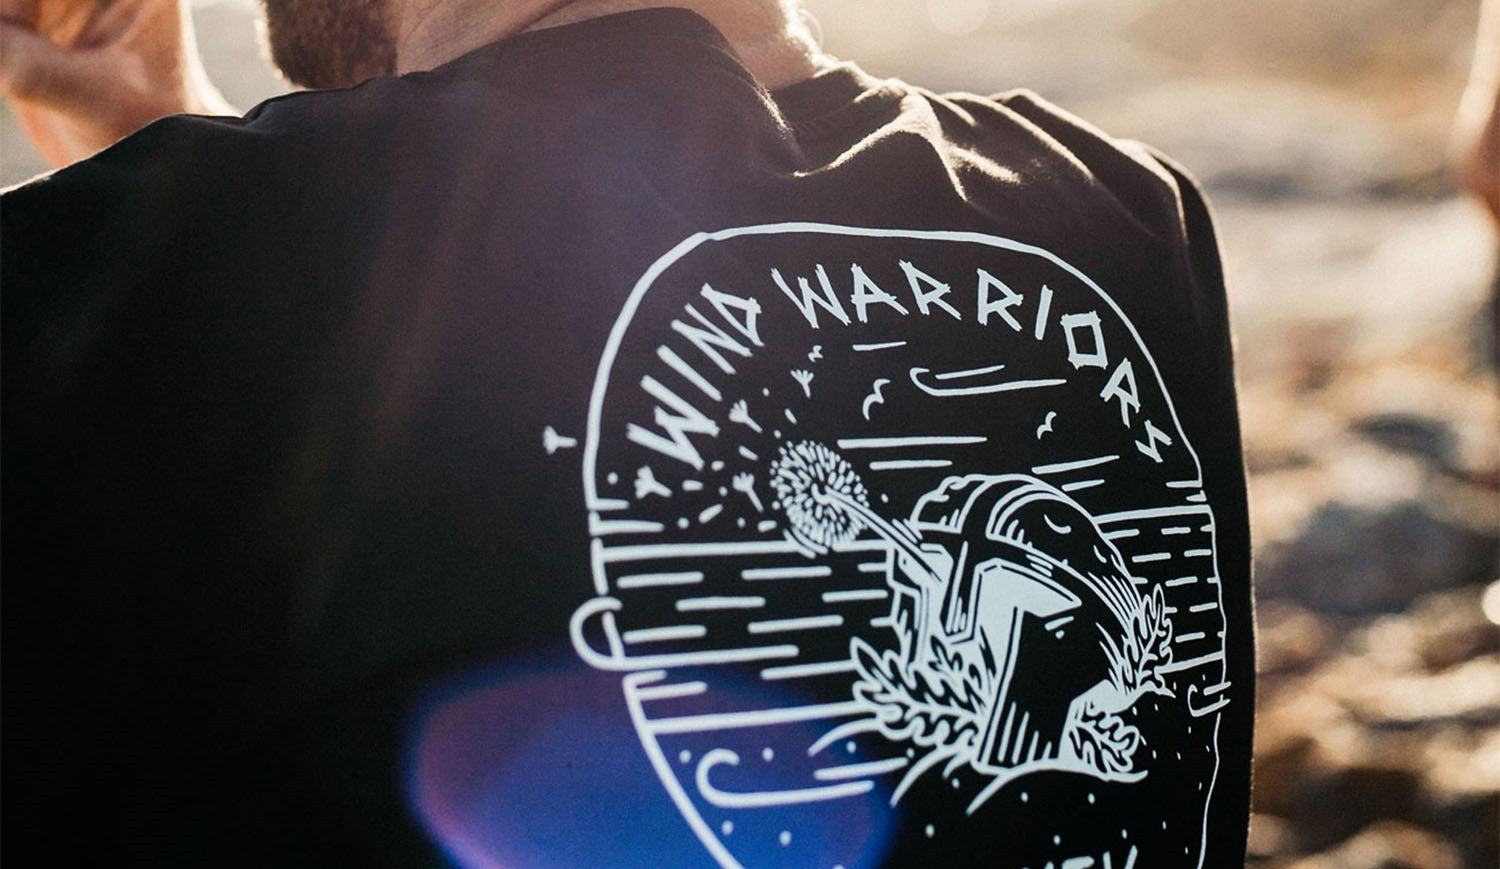 mystic-warrior-t-shirt-287206_2048x2048